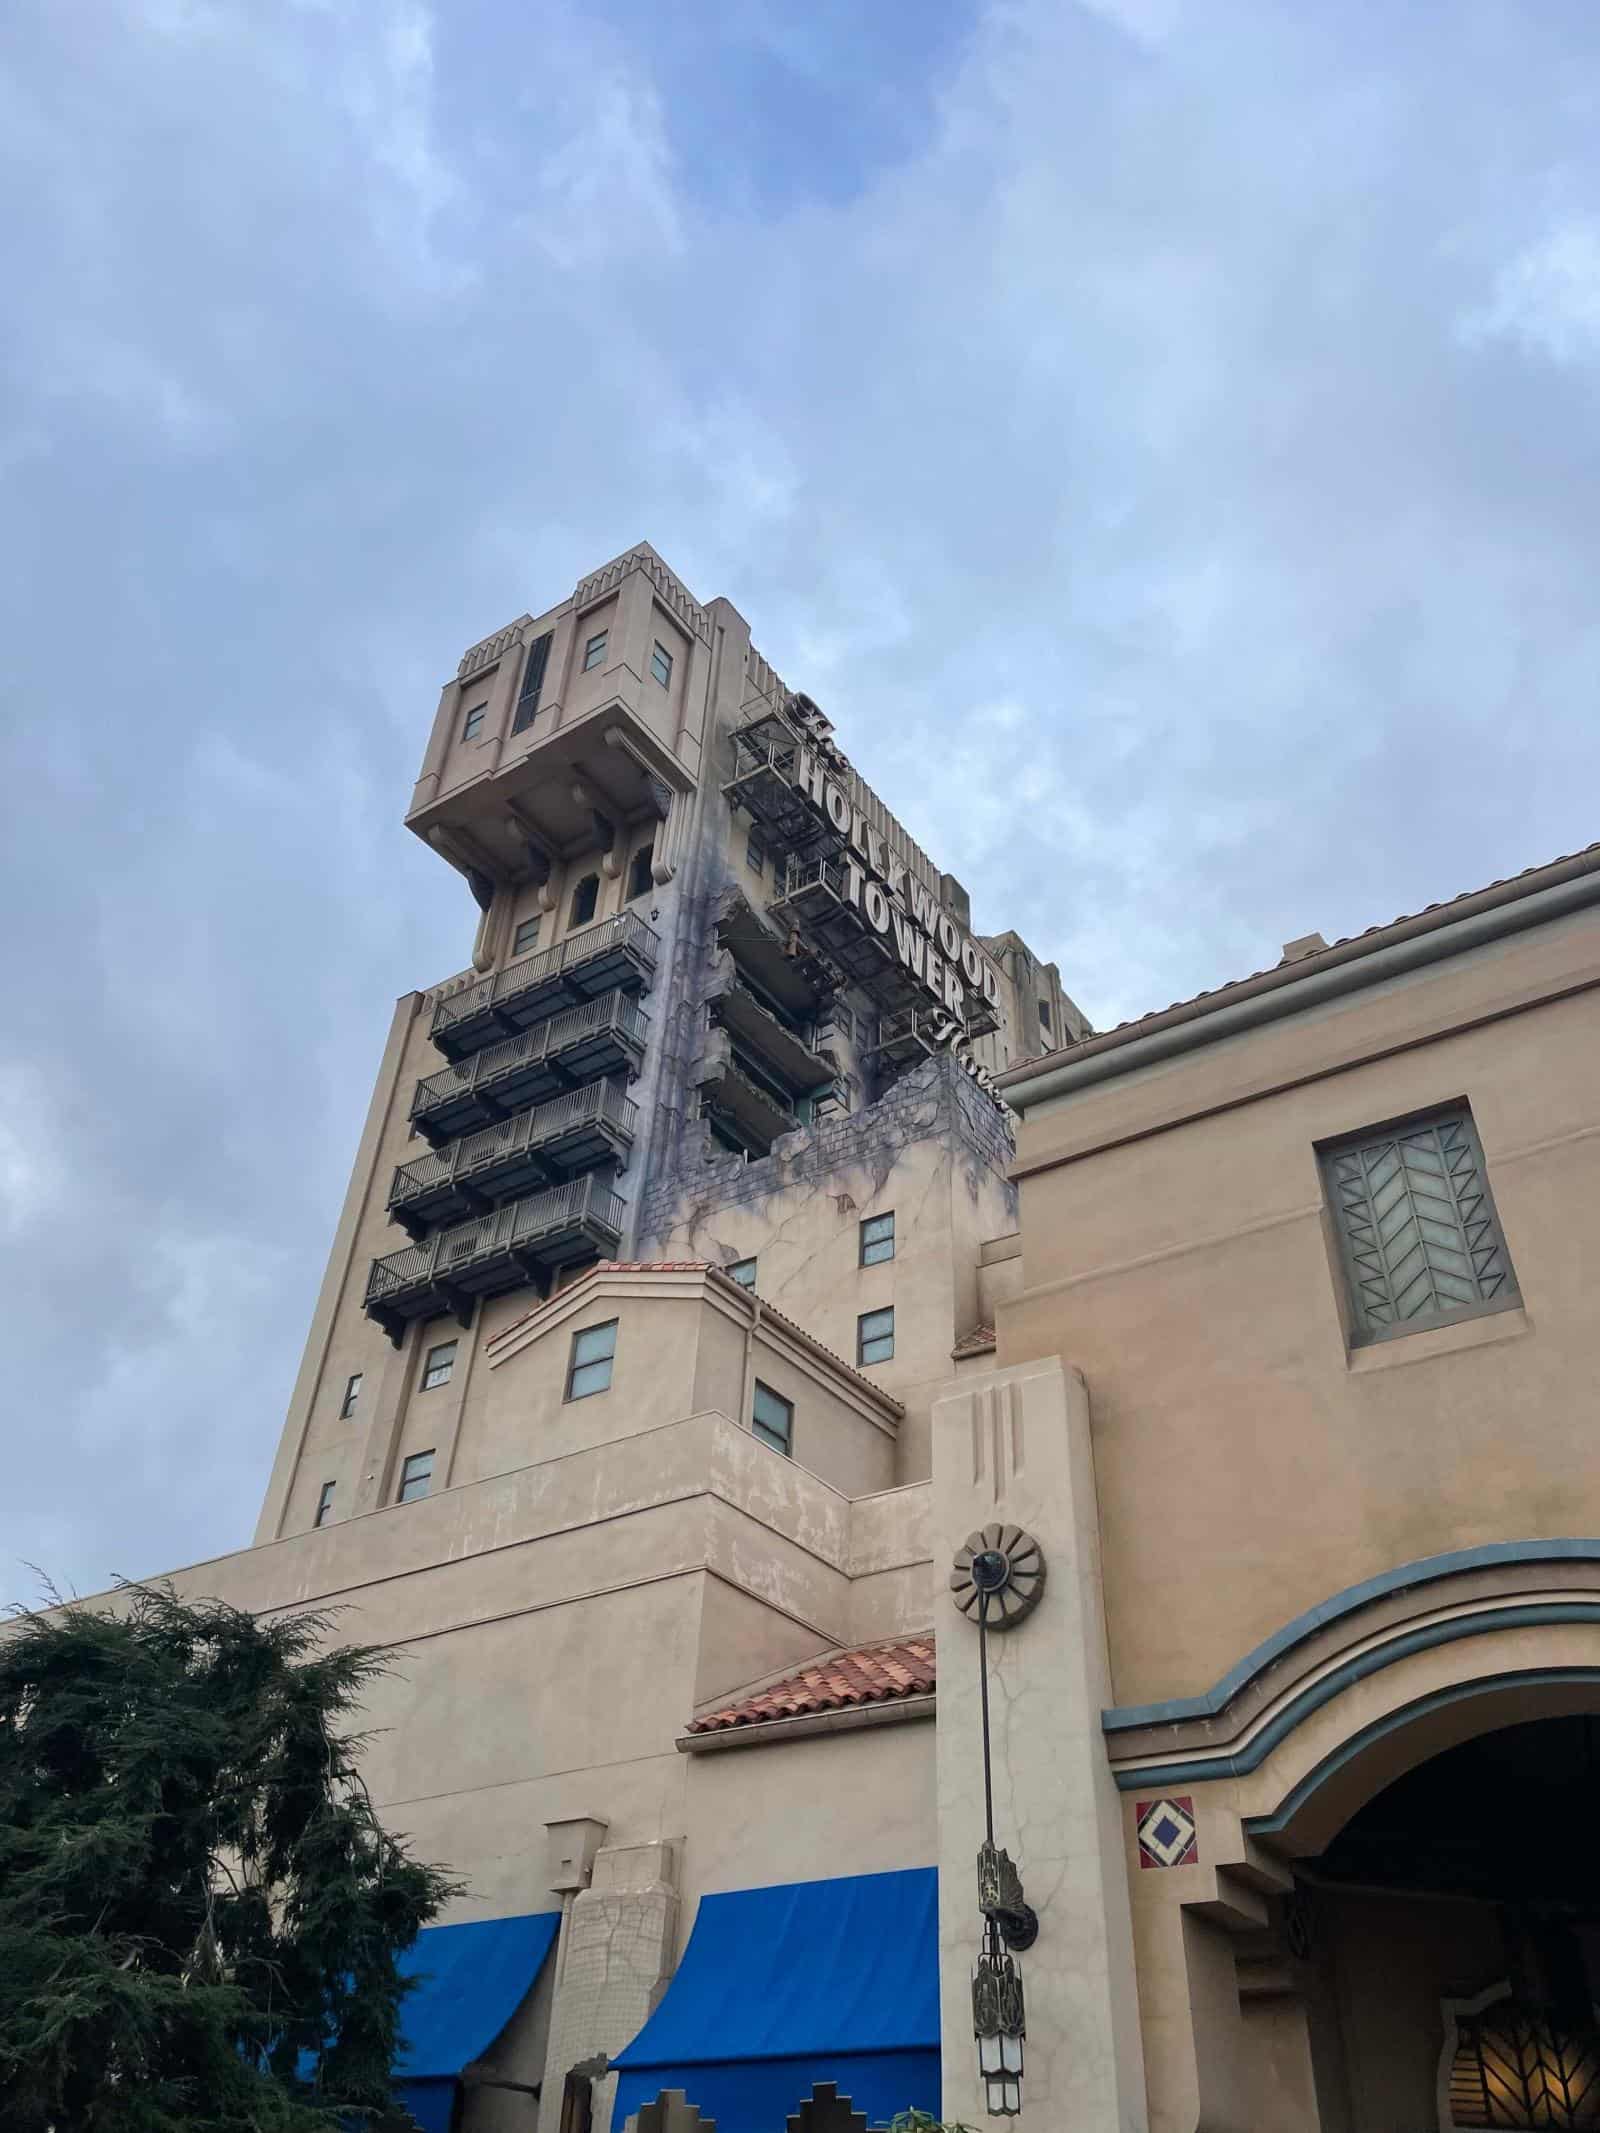 Tower of Terror - scary ride at Disneyland Paris